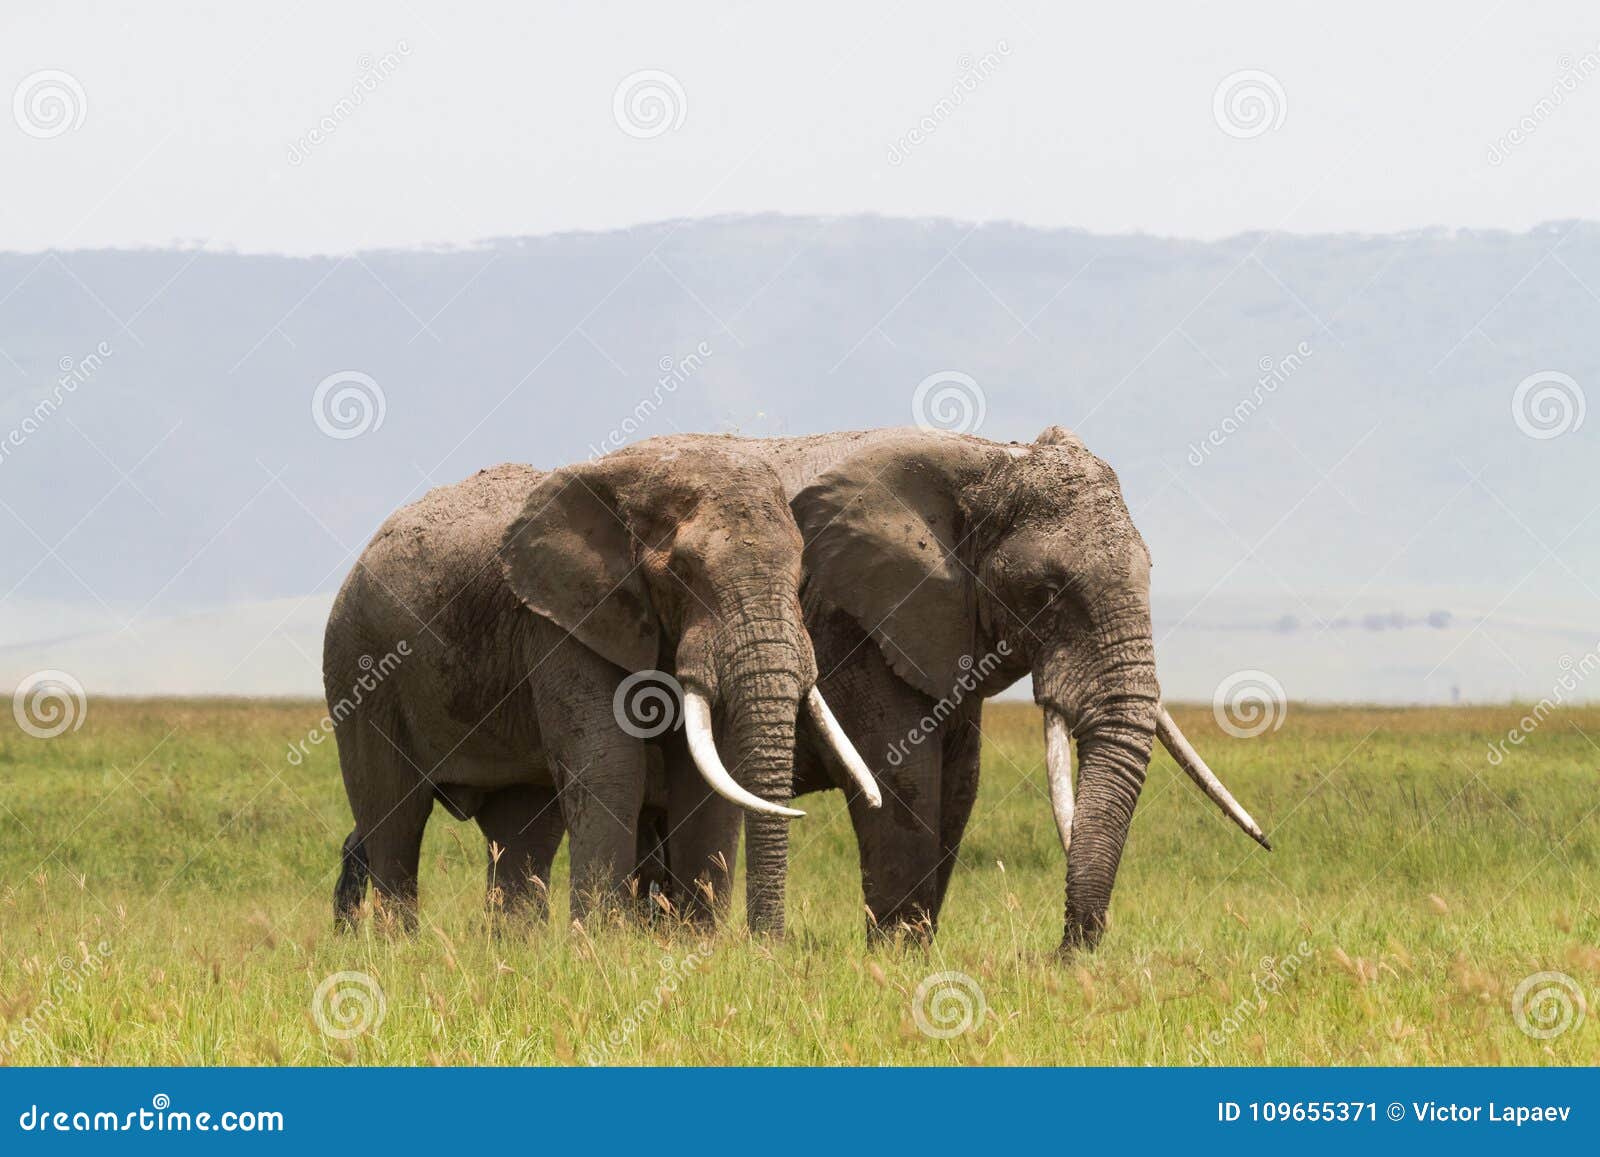 two elephants communicate. crater ngorongoro, tanzania